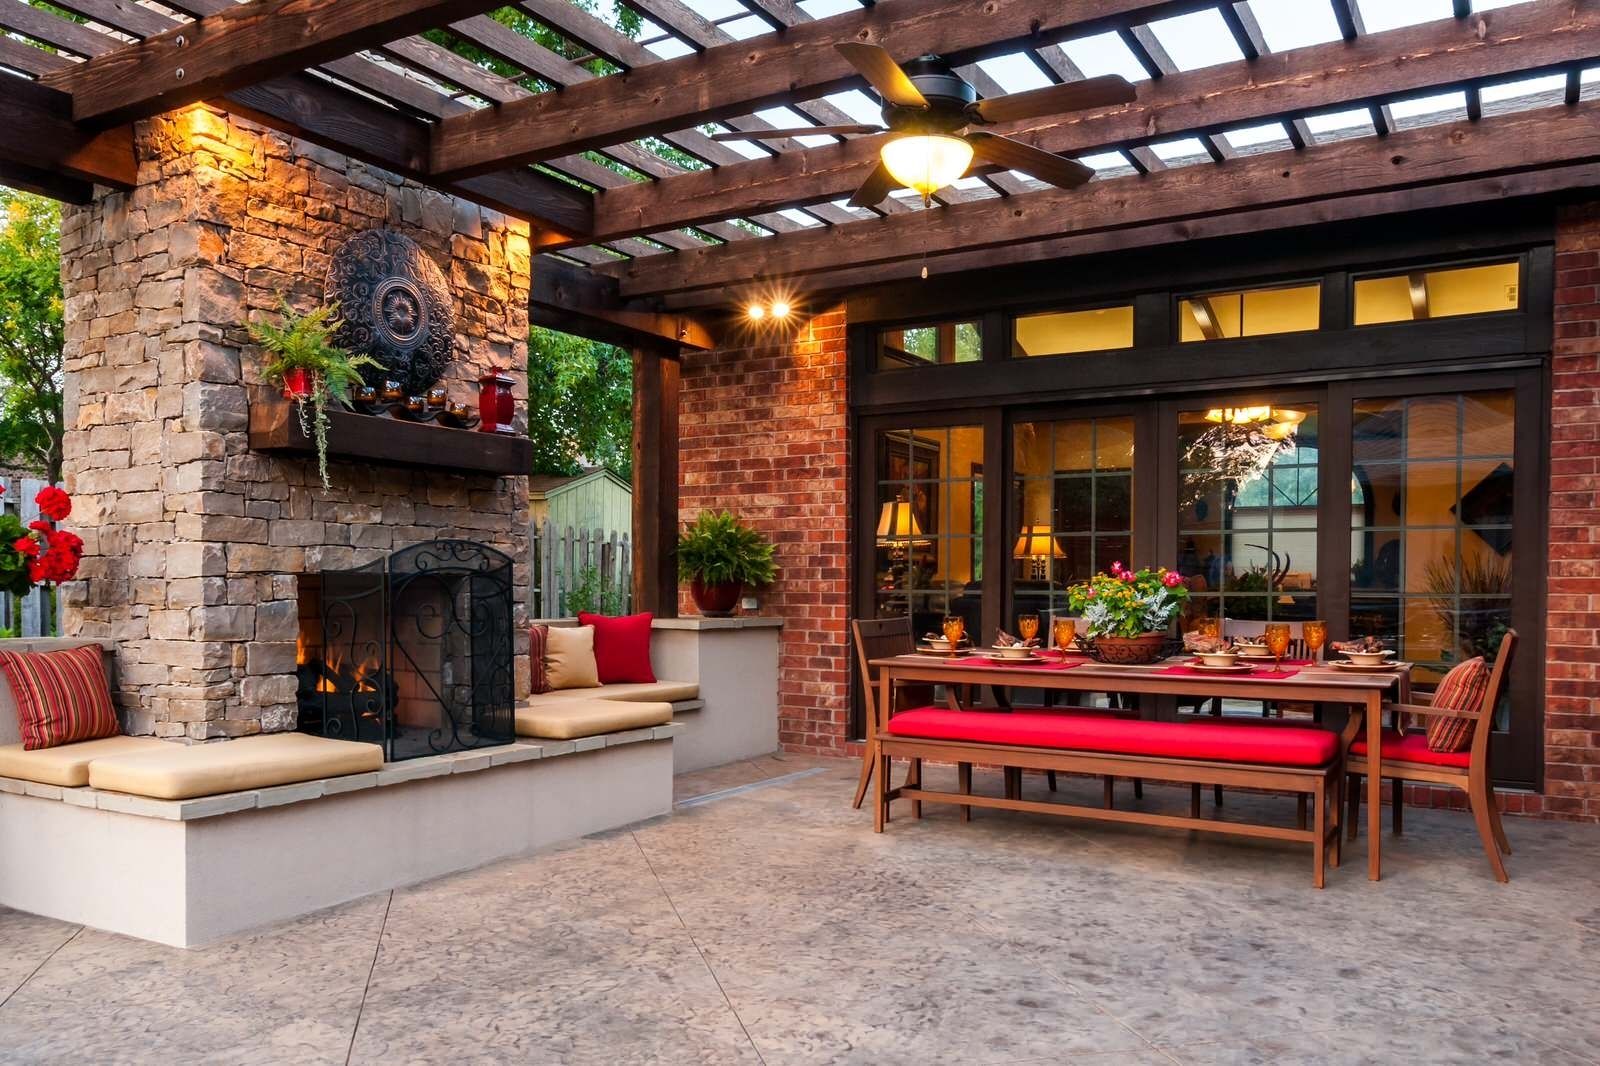 Outdoor Porch Ceiling Lights | Home Design Ideas Within Outdoor Deck Ceiling Lights (View 8 of 15)